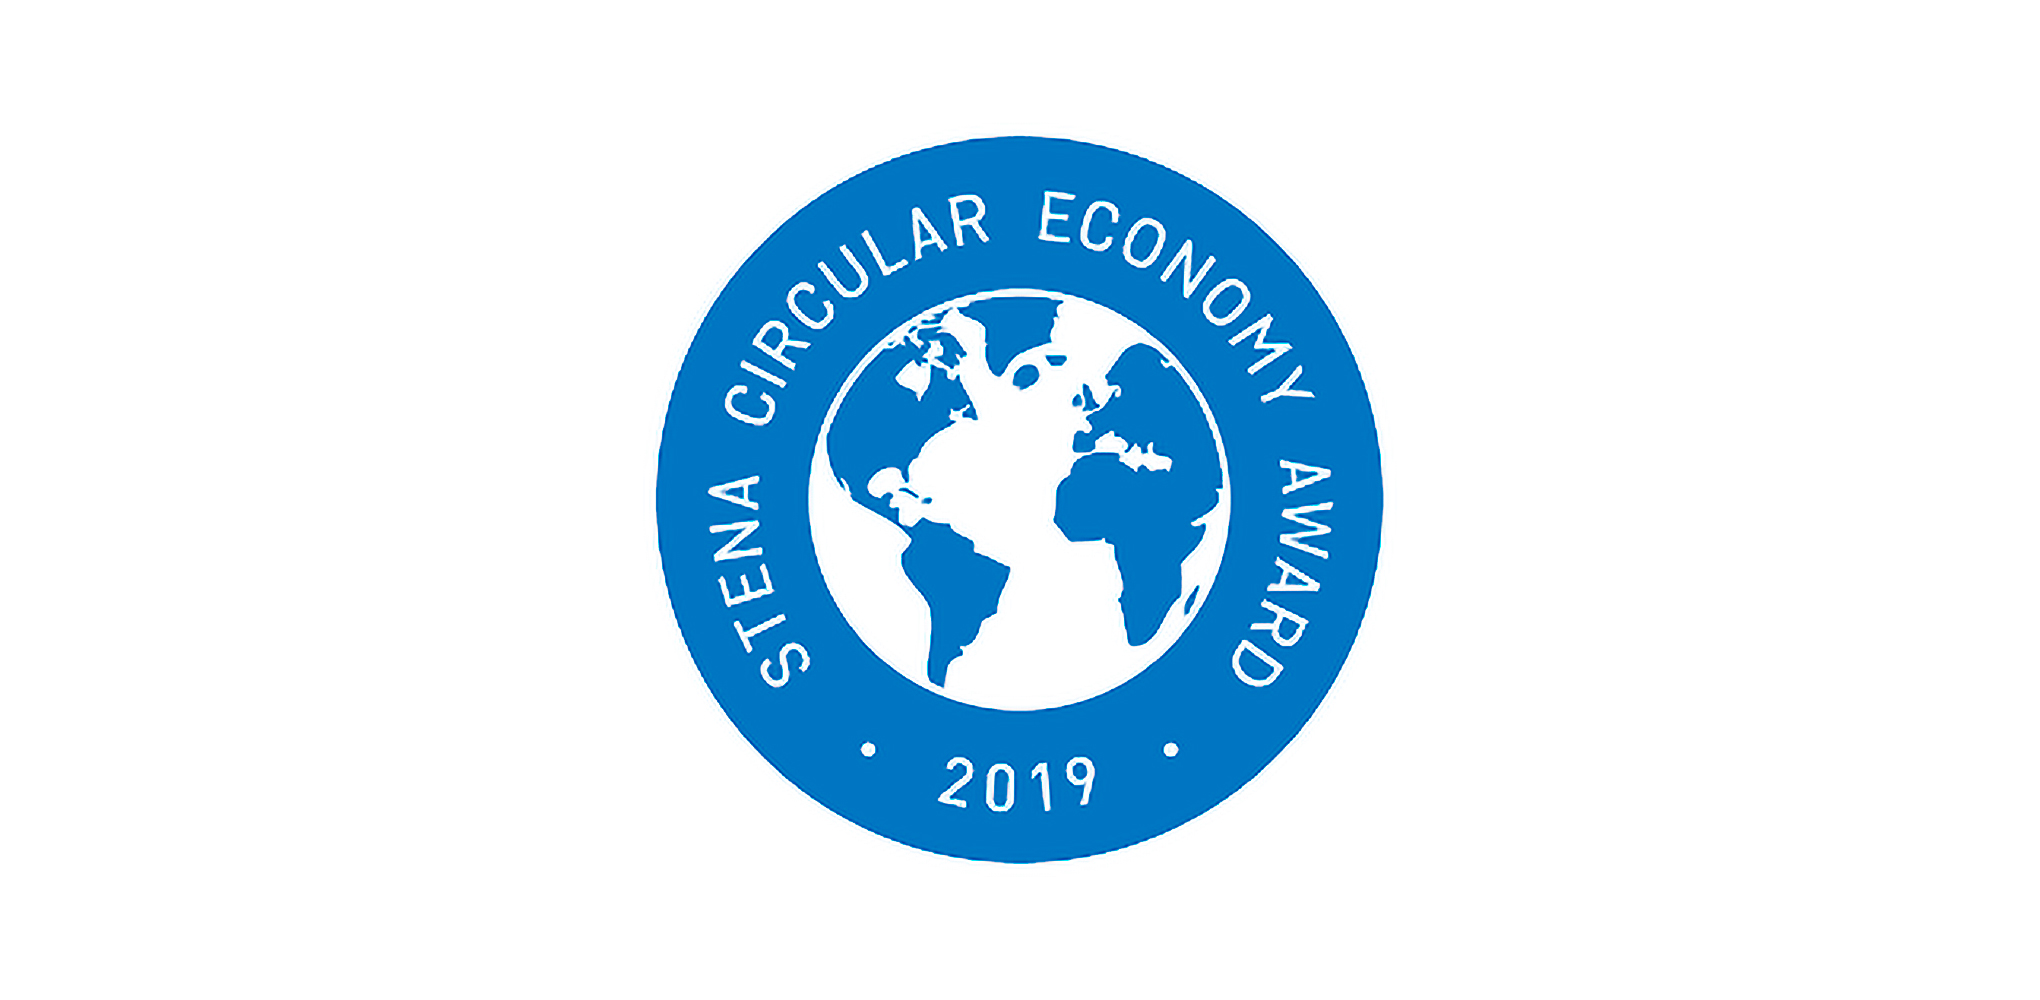 Stena Circular Economy Award